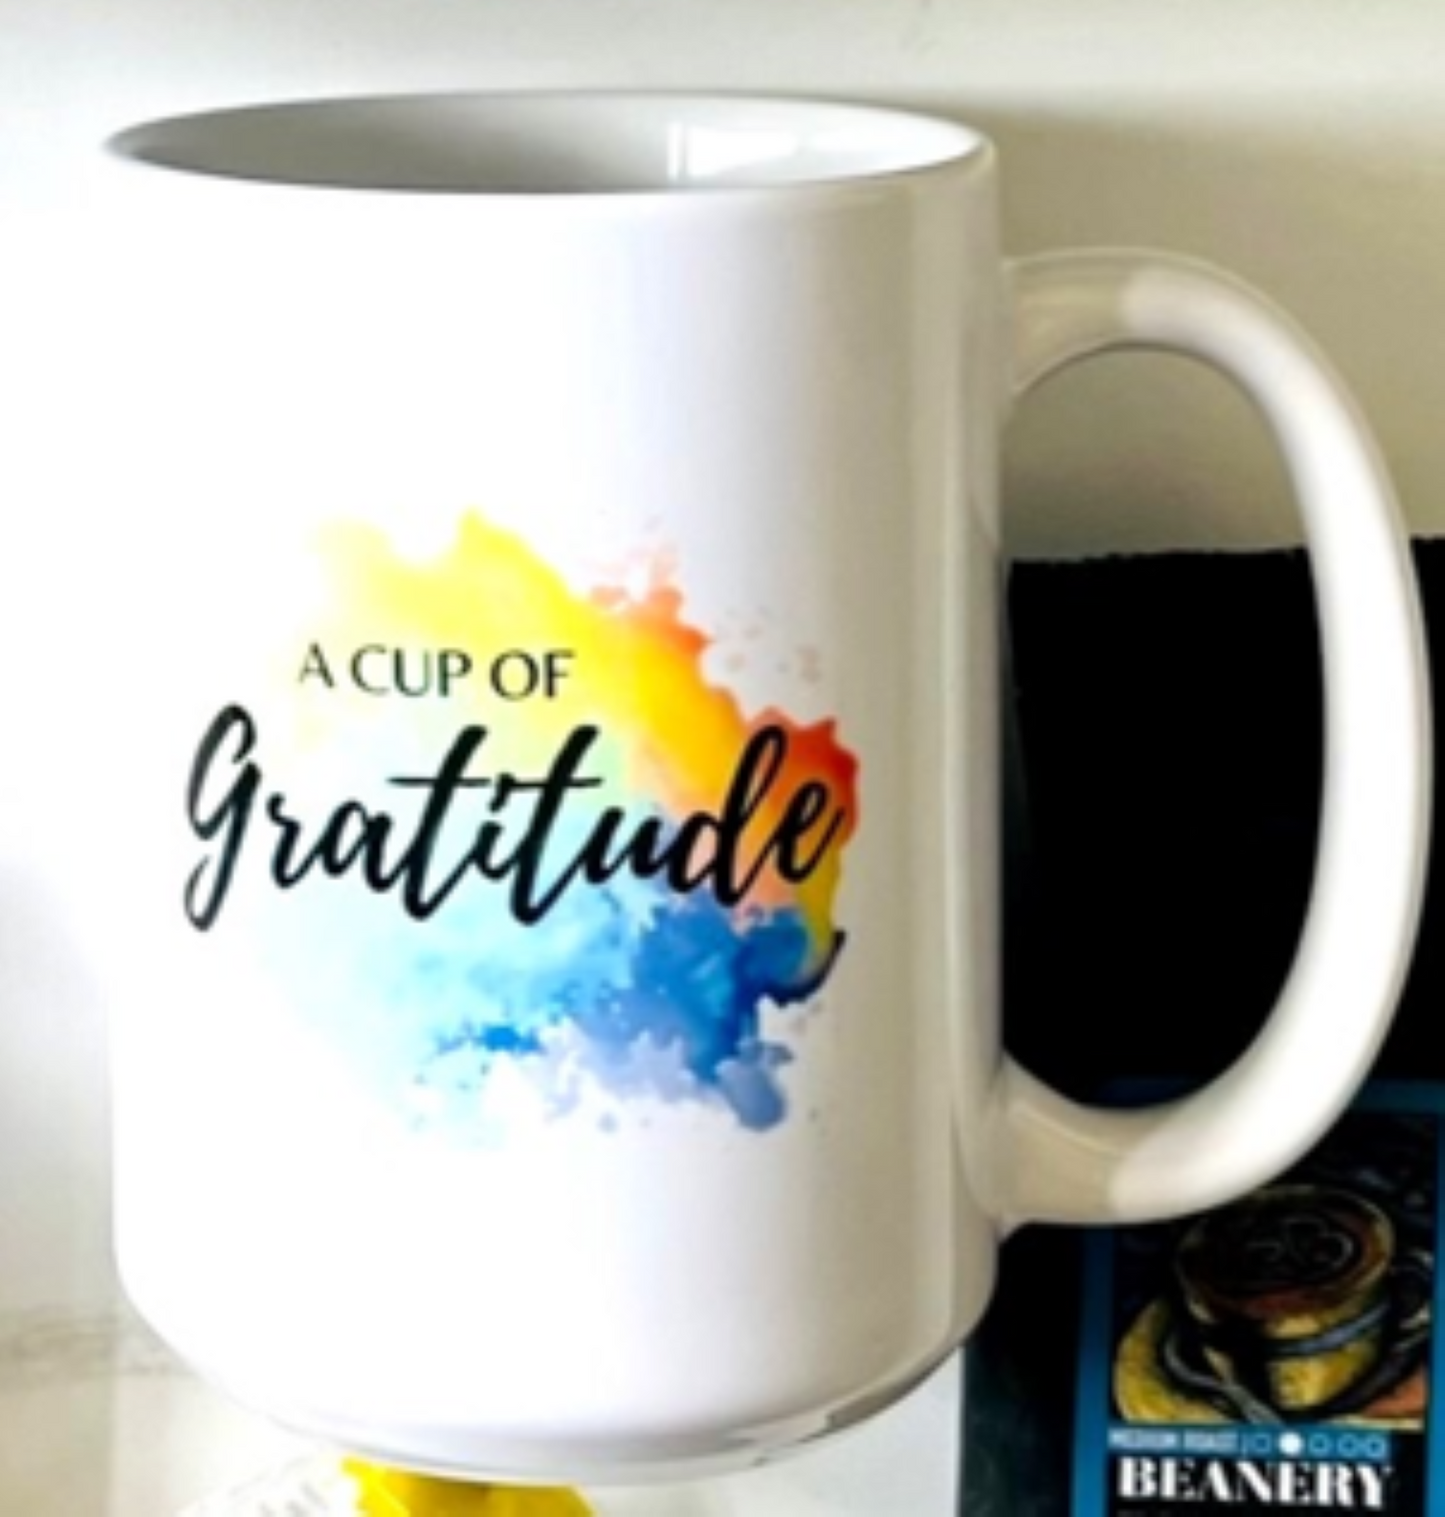 Gratitude Coffee Mug